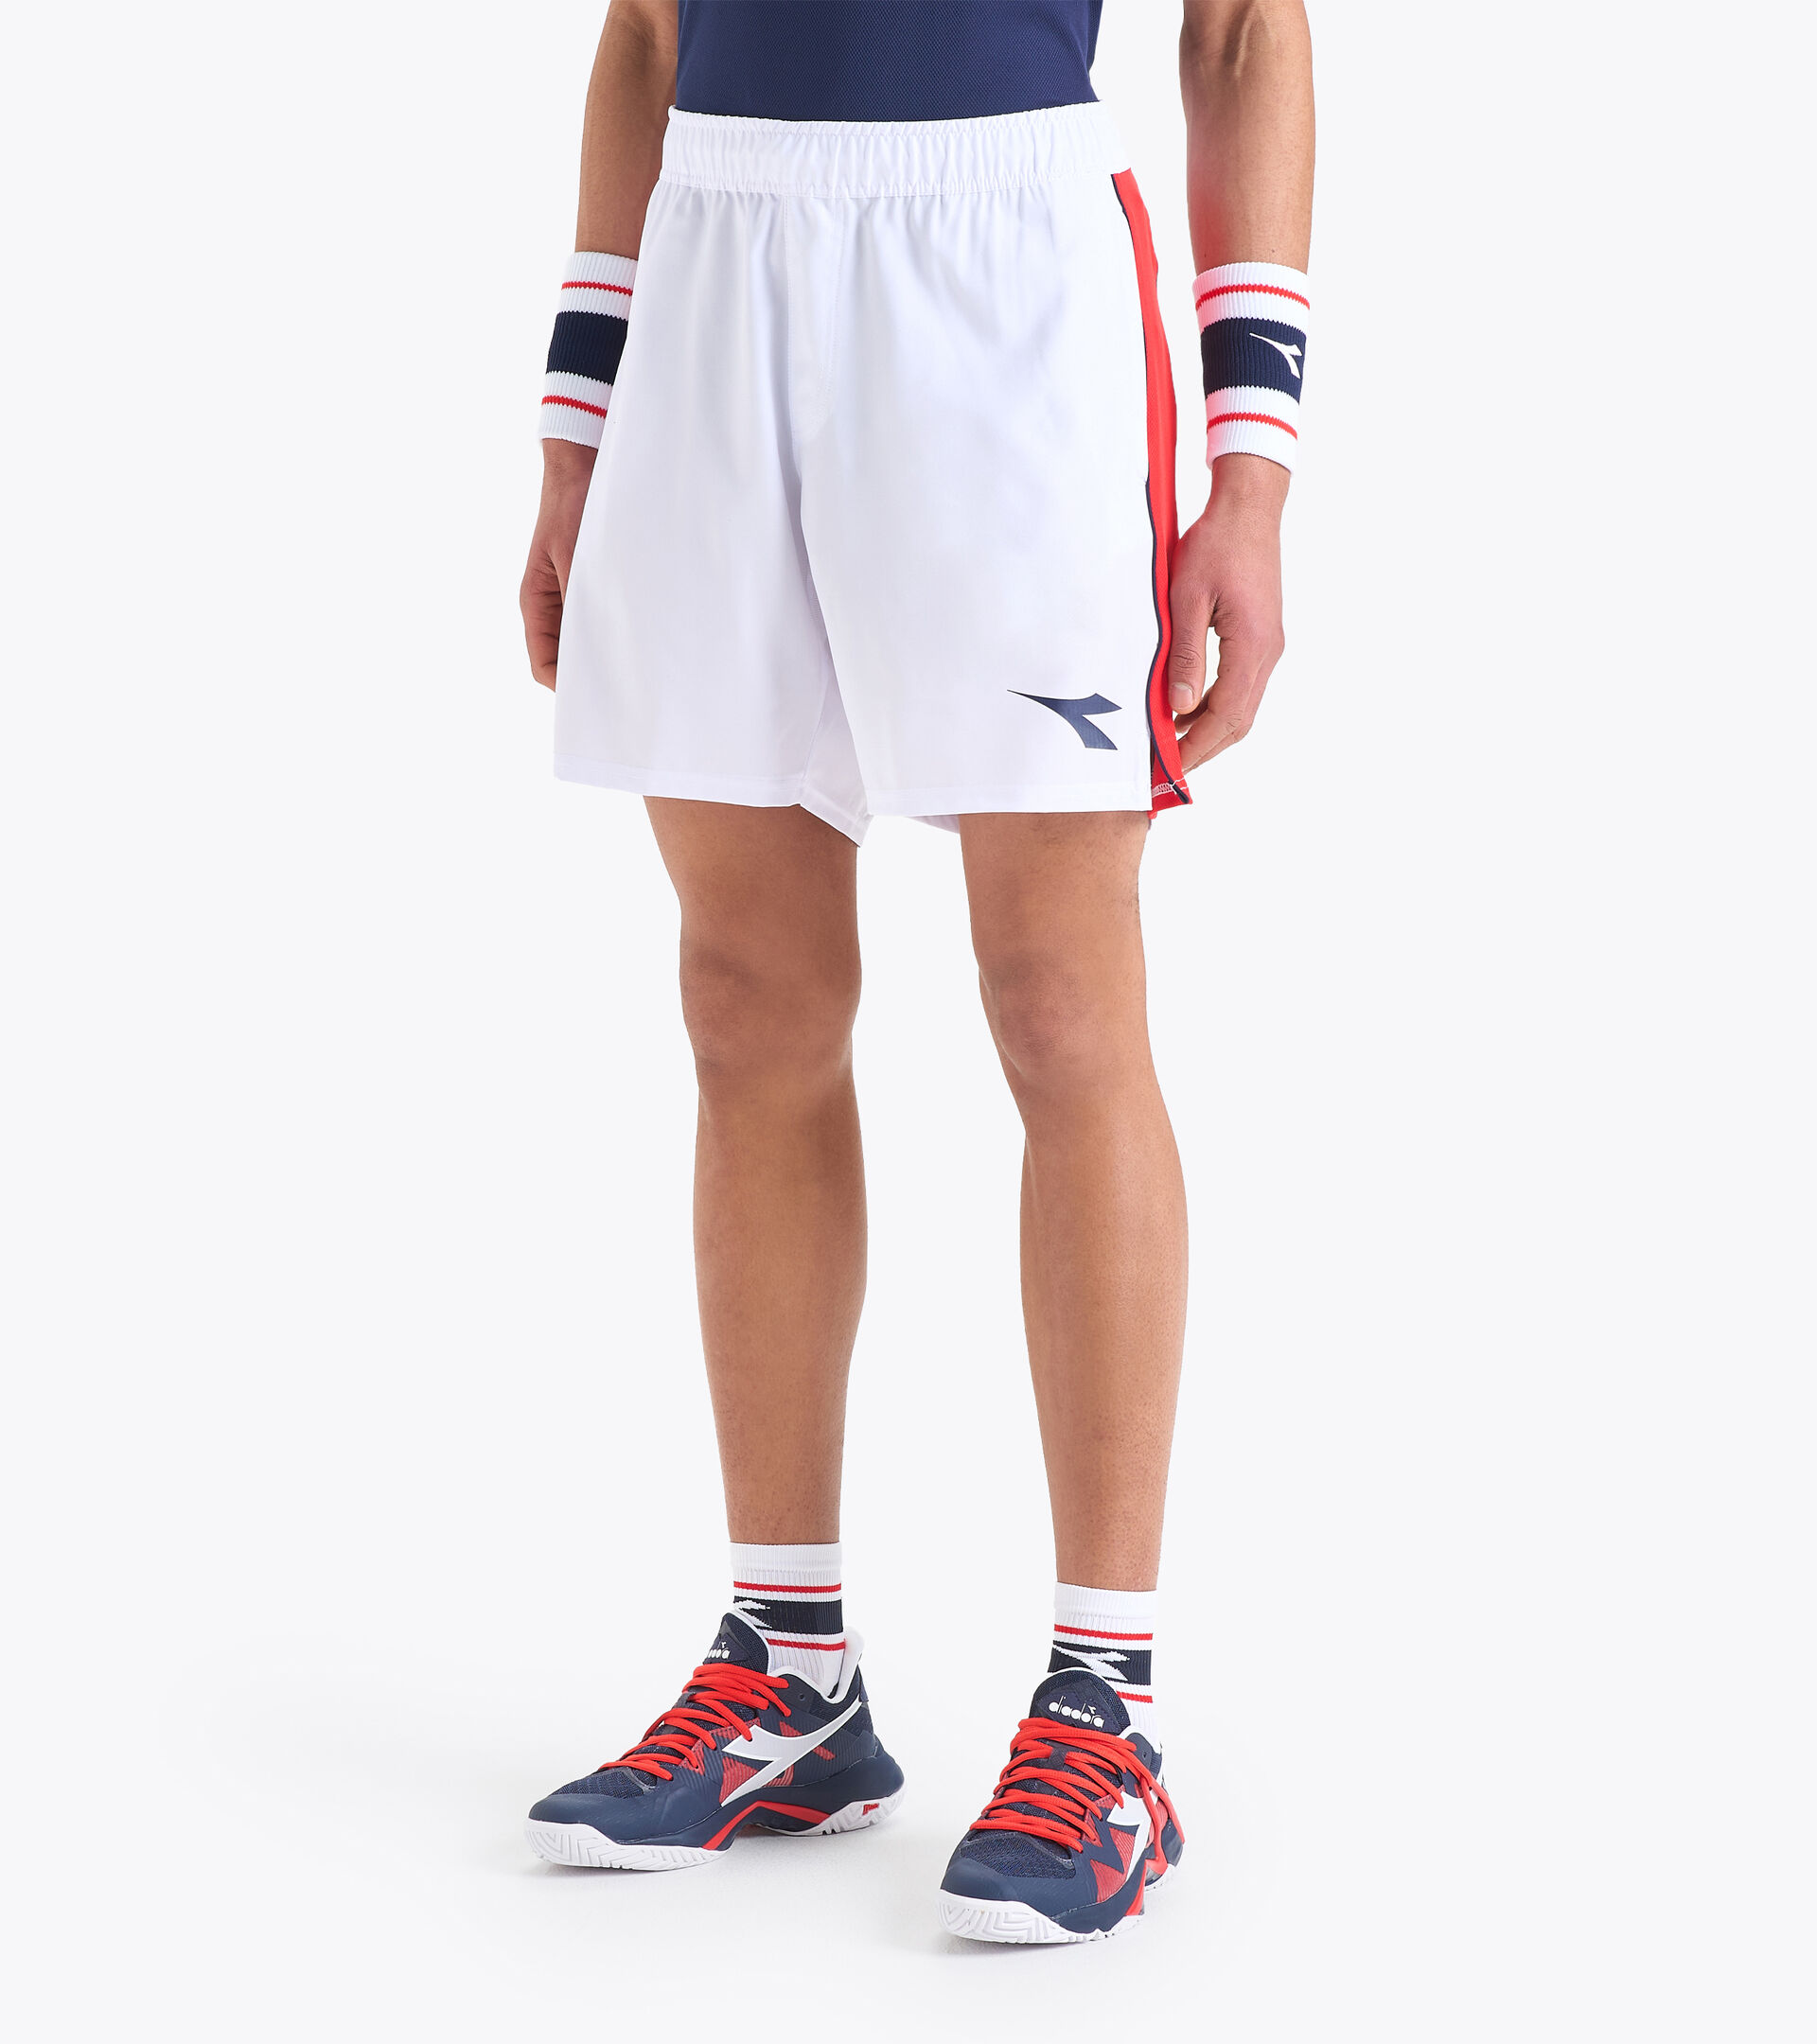 BERMUDA ICON Tennis shorts - Men - Diadora Online Store DK